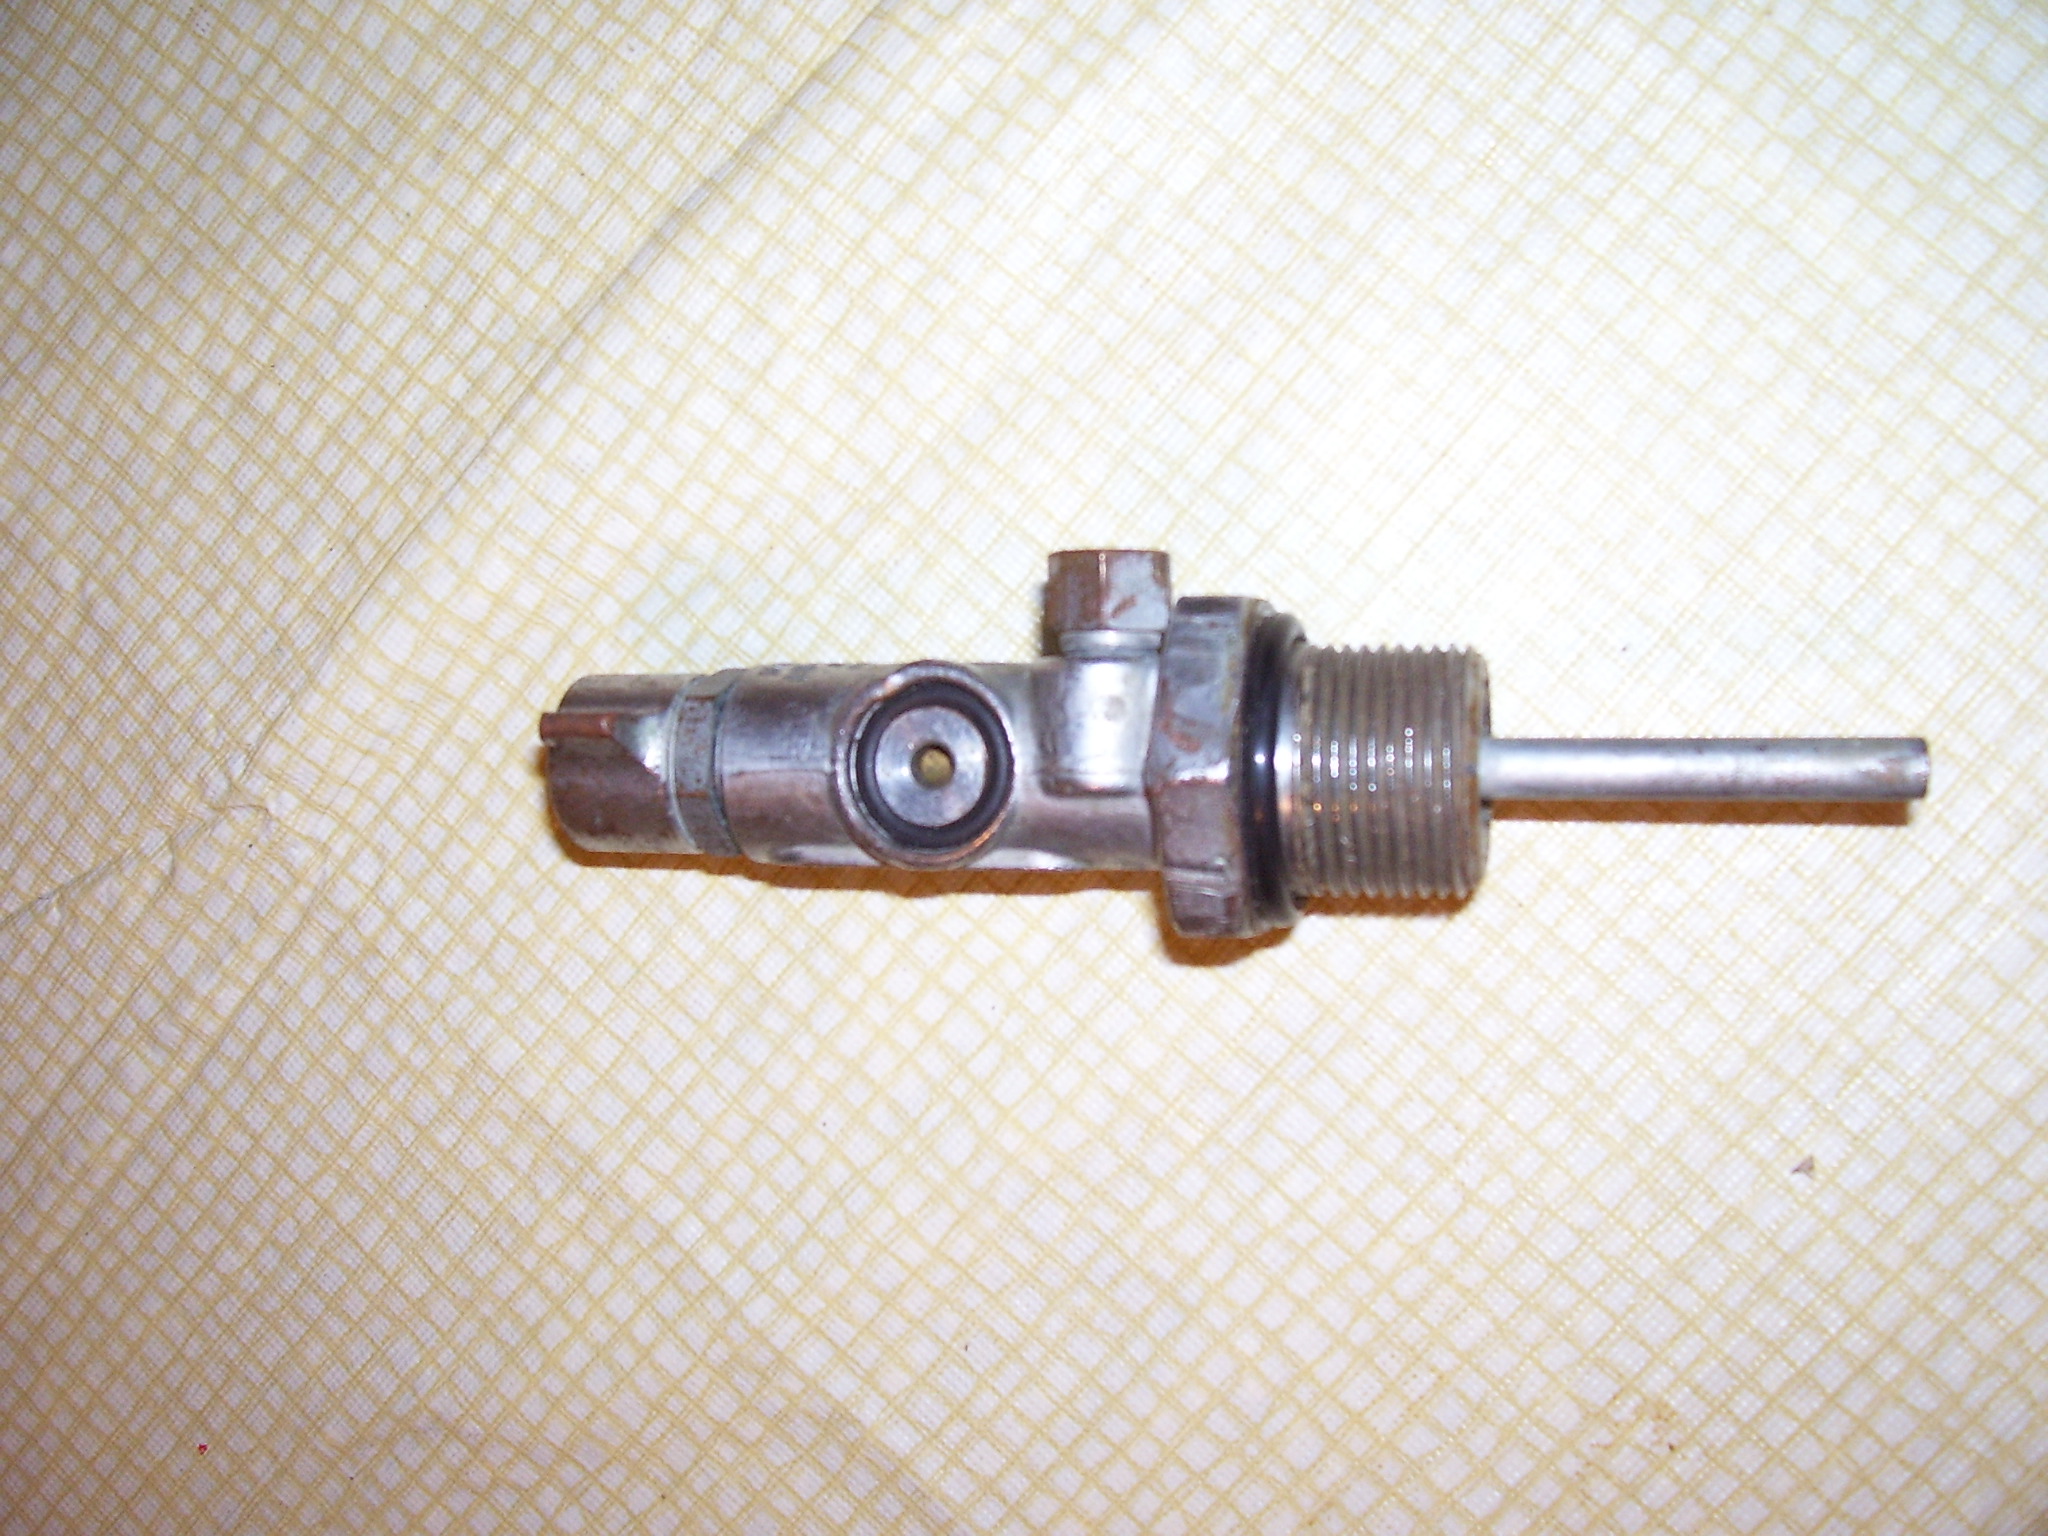 Post valve